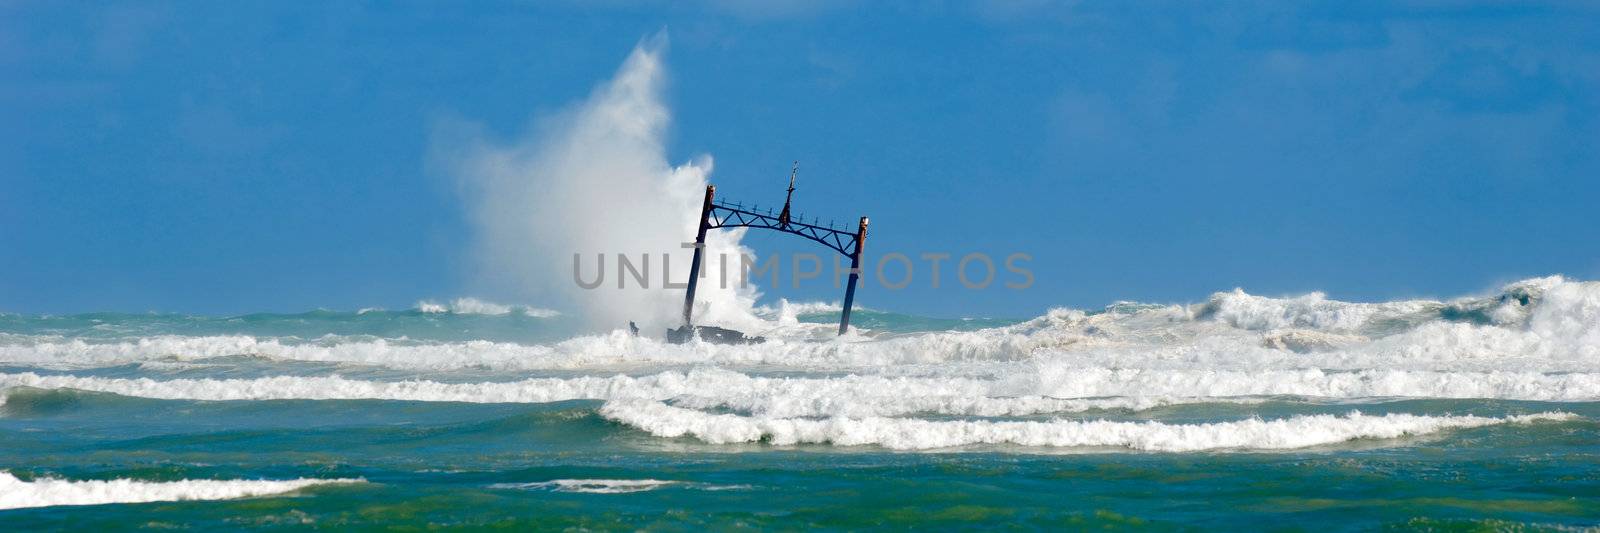 Storm at sea and ship wreck by cfoto